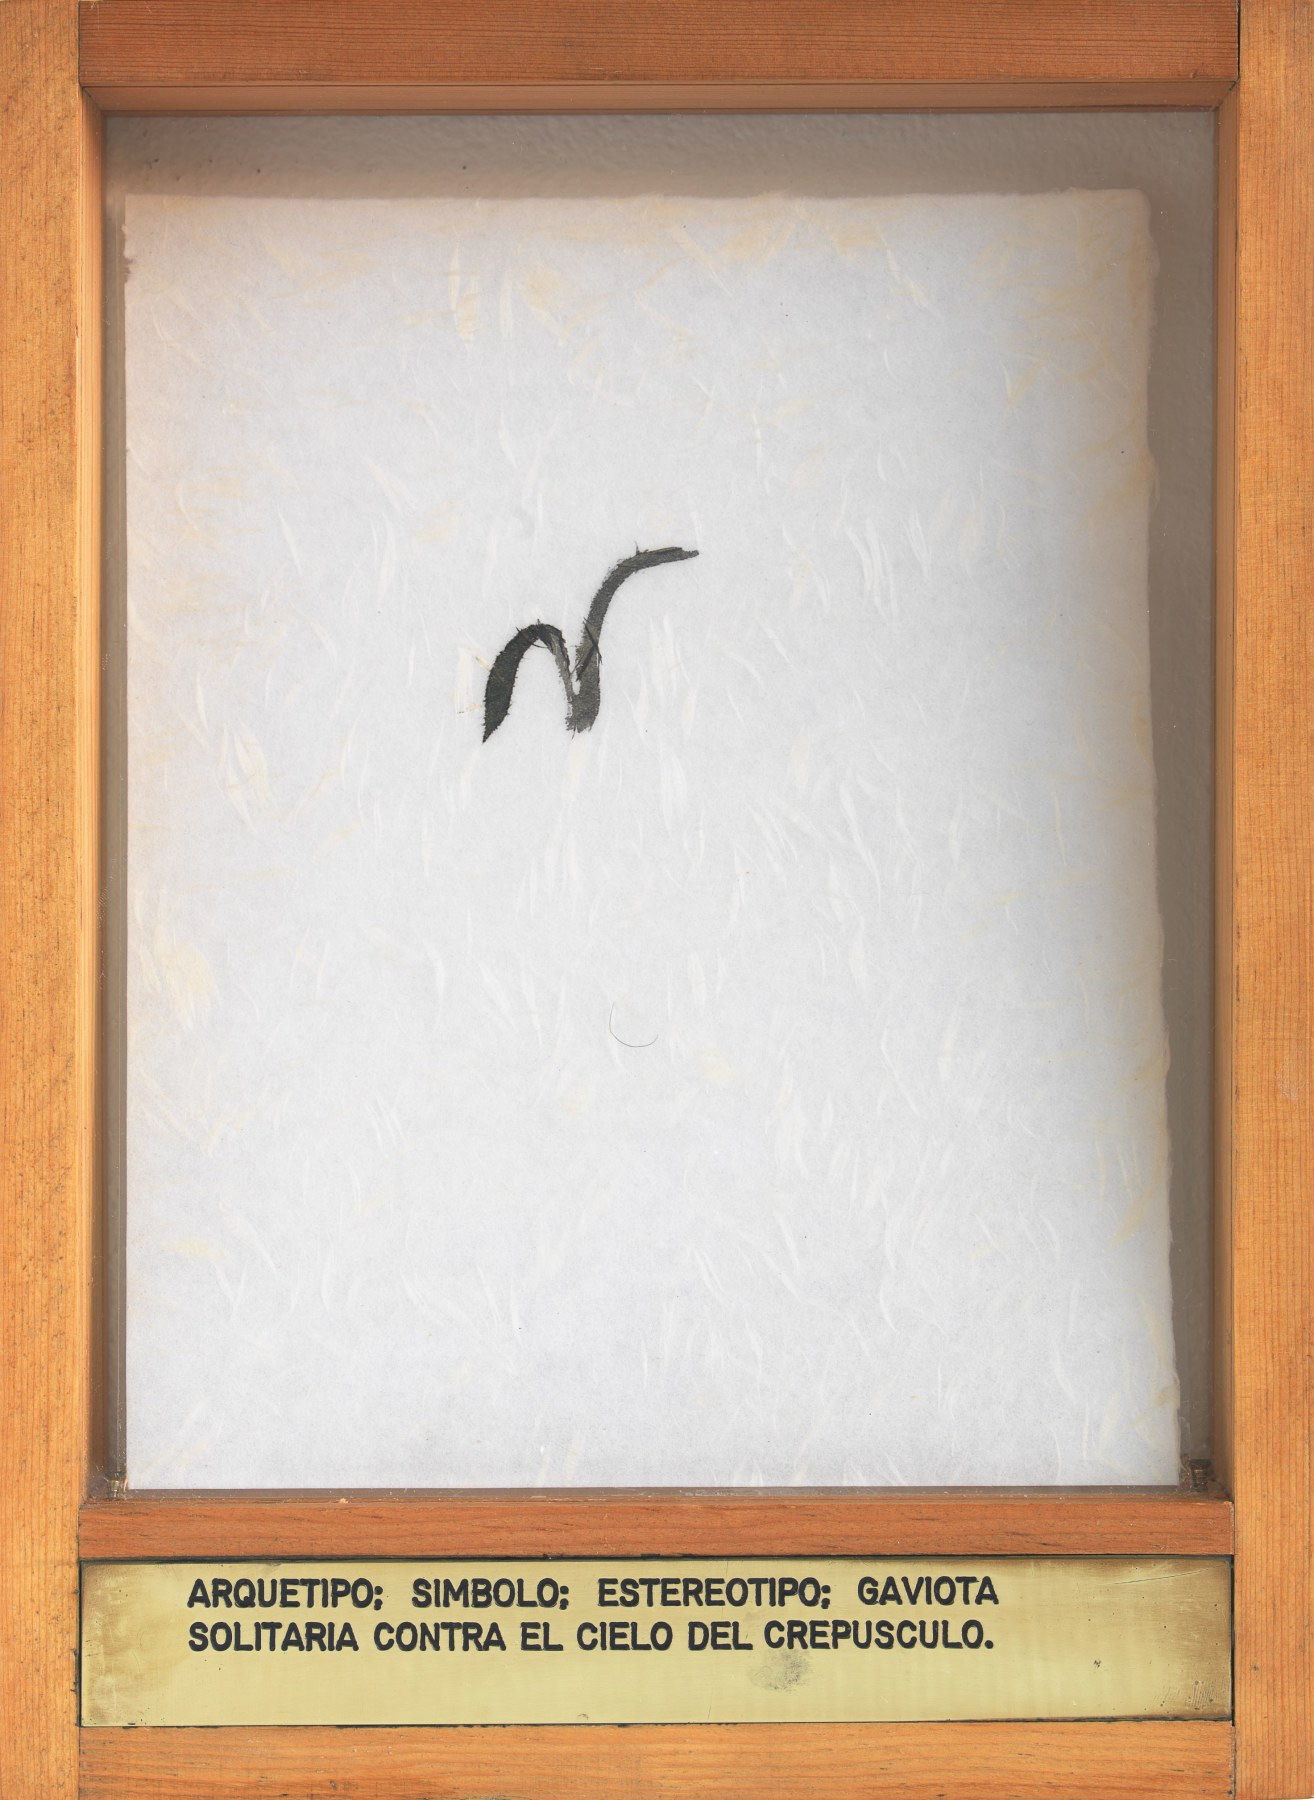 Arquetipo; Simbolo; Estereotipo; Gaviota Solitaria Contra el Cielo del Crepusculo, 1973-1976, Engraved brass plaque, laminated ink on rice paper, glass and wood